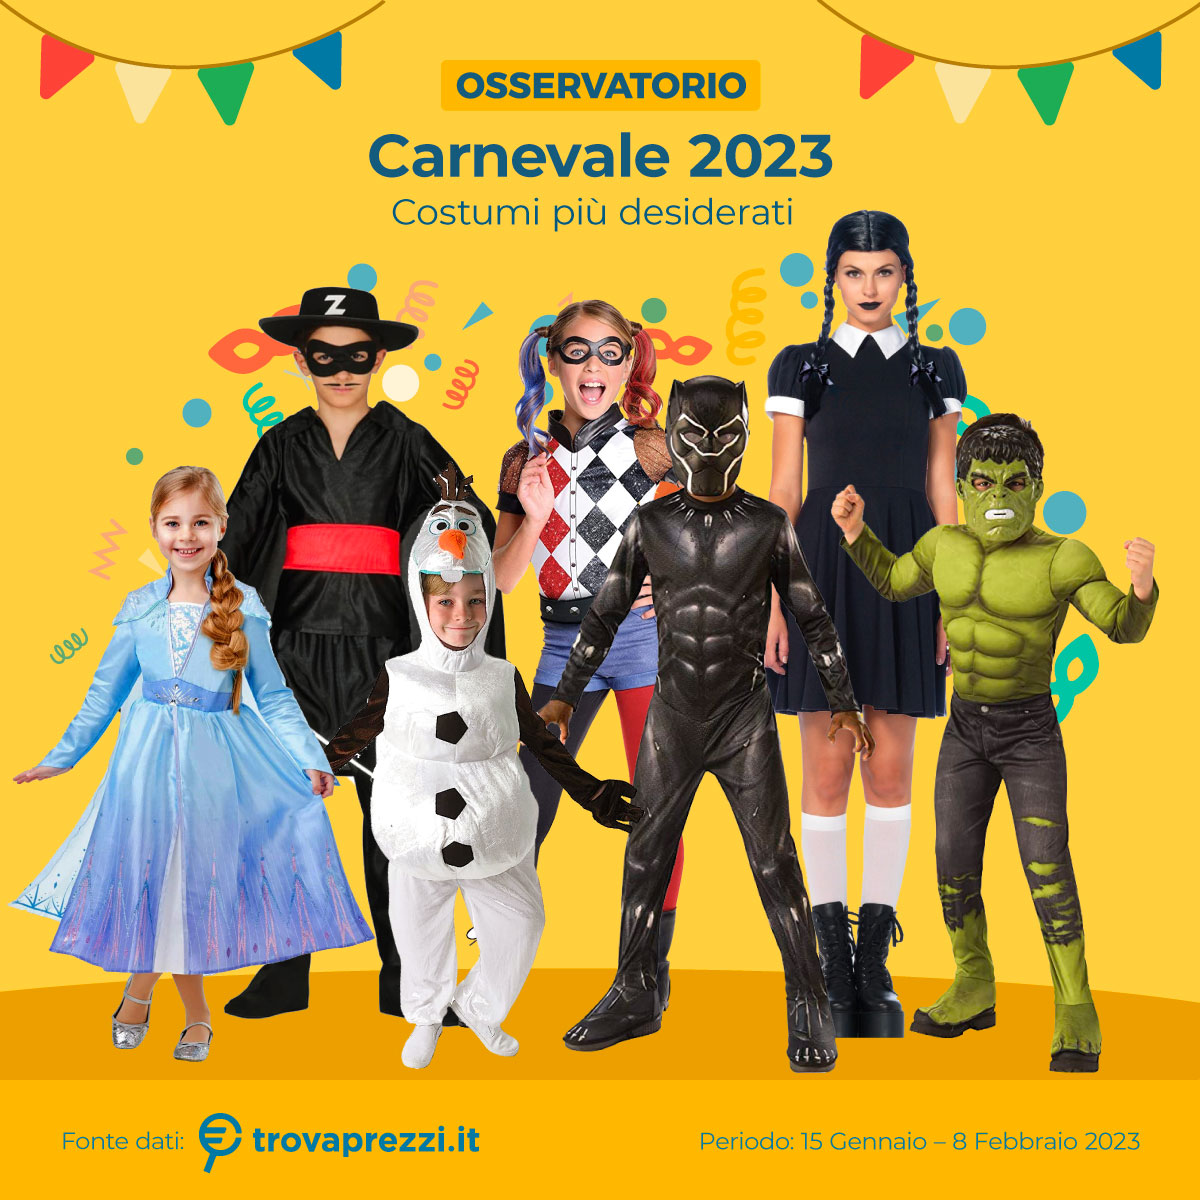 Carnevale, i trend 2023: tra i costumi più ricercati Mercoledì Addams e  Elsa di Frozen